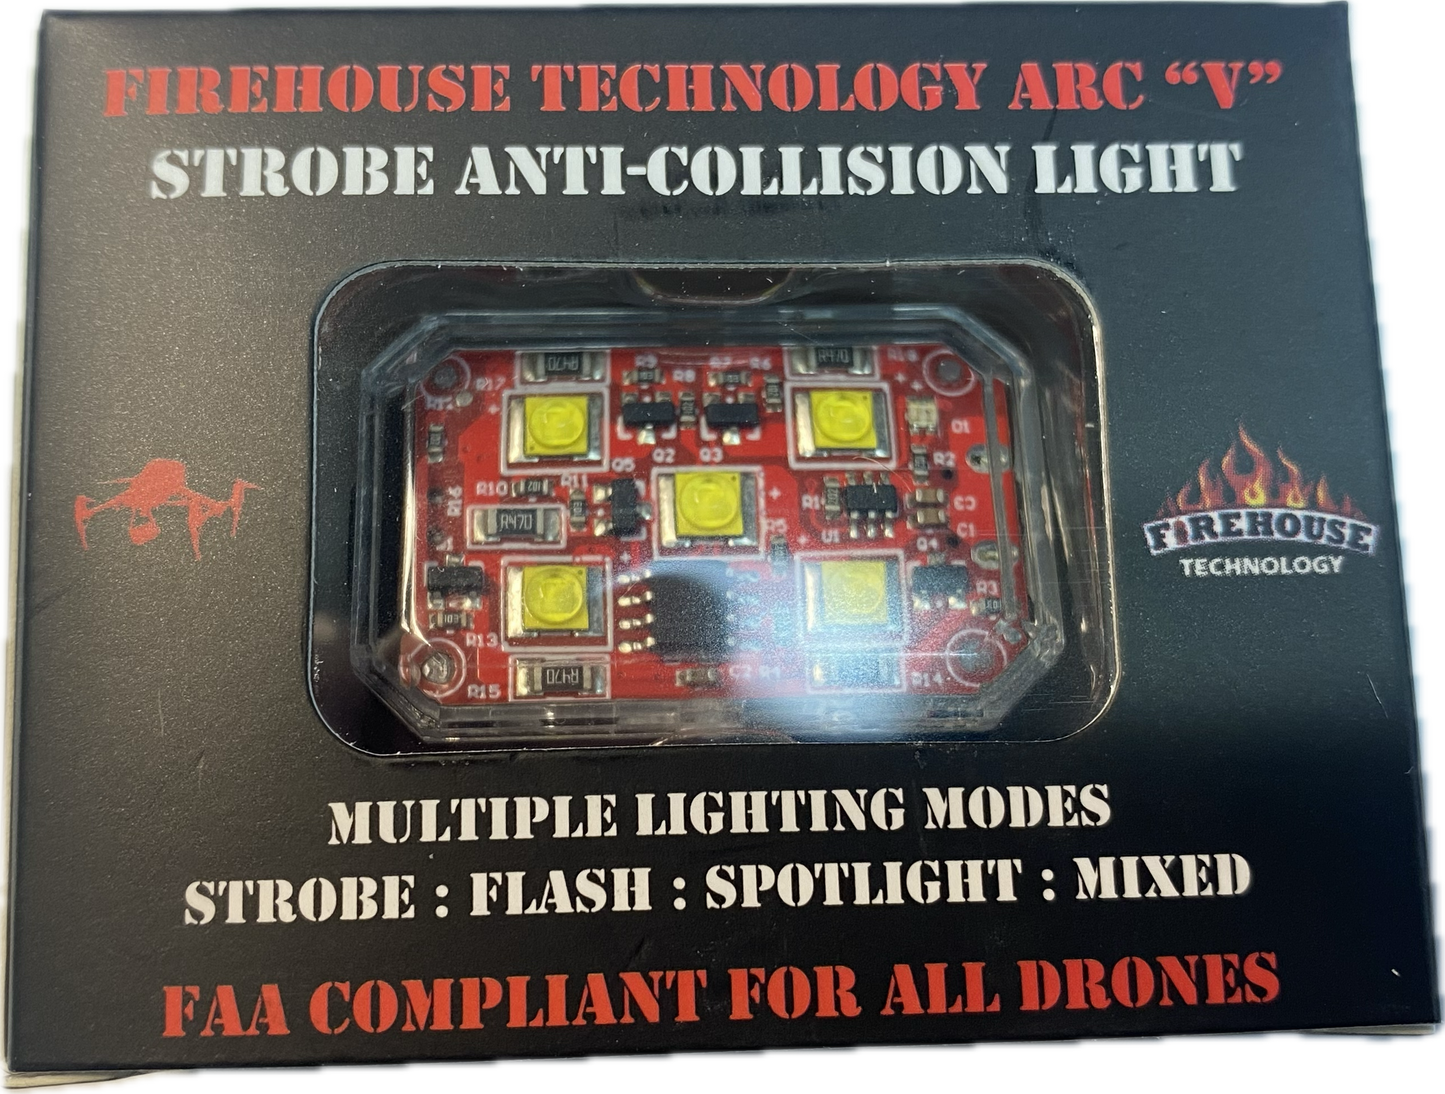 Firehouse ARC "V" Drone Strobe Spot Light 1000 Lumen (White): FAA 107 Compliant